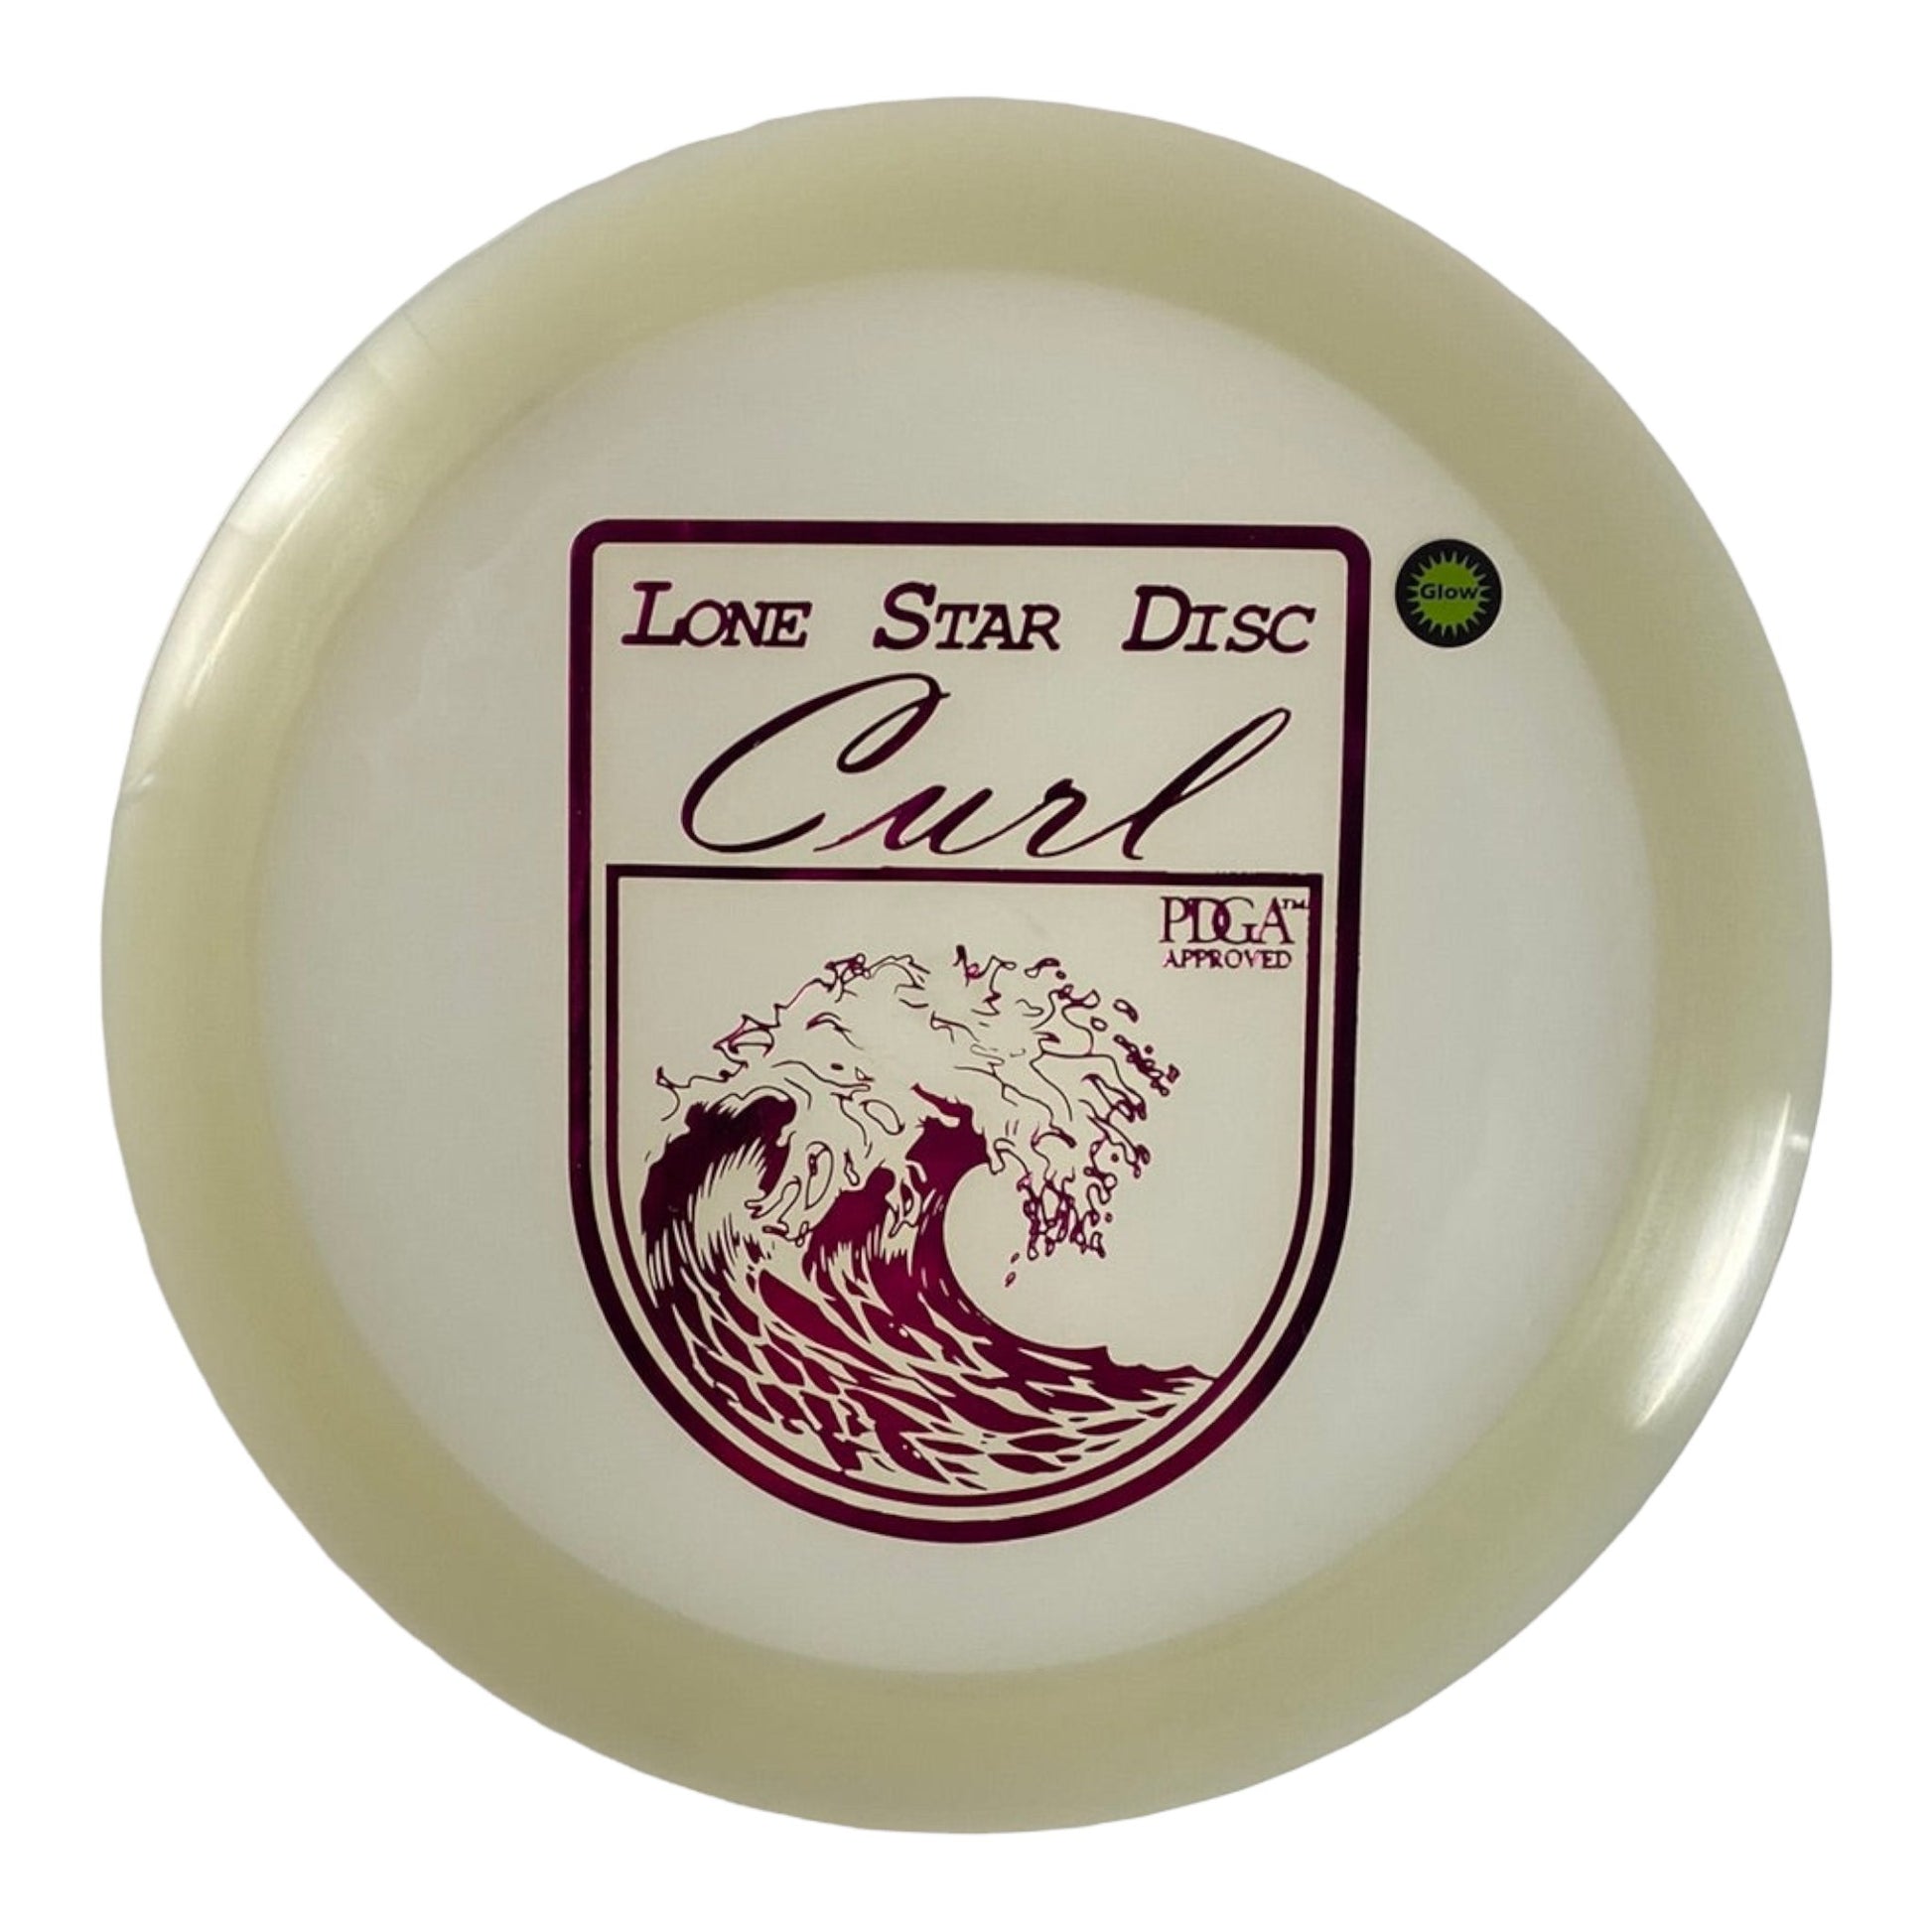 Lone Star Discs Curl | Glow | White/Pink 172-173g Disc Golf